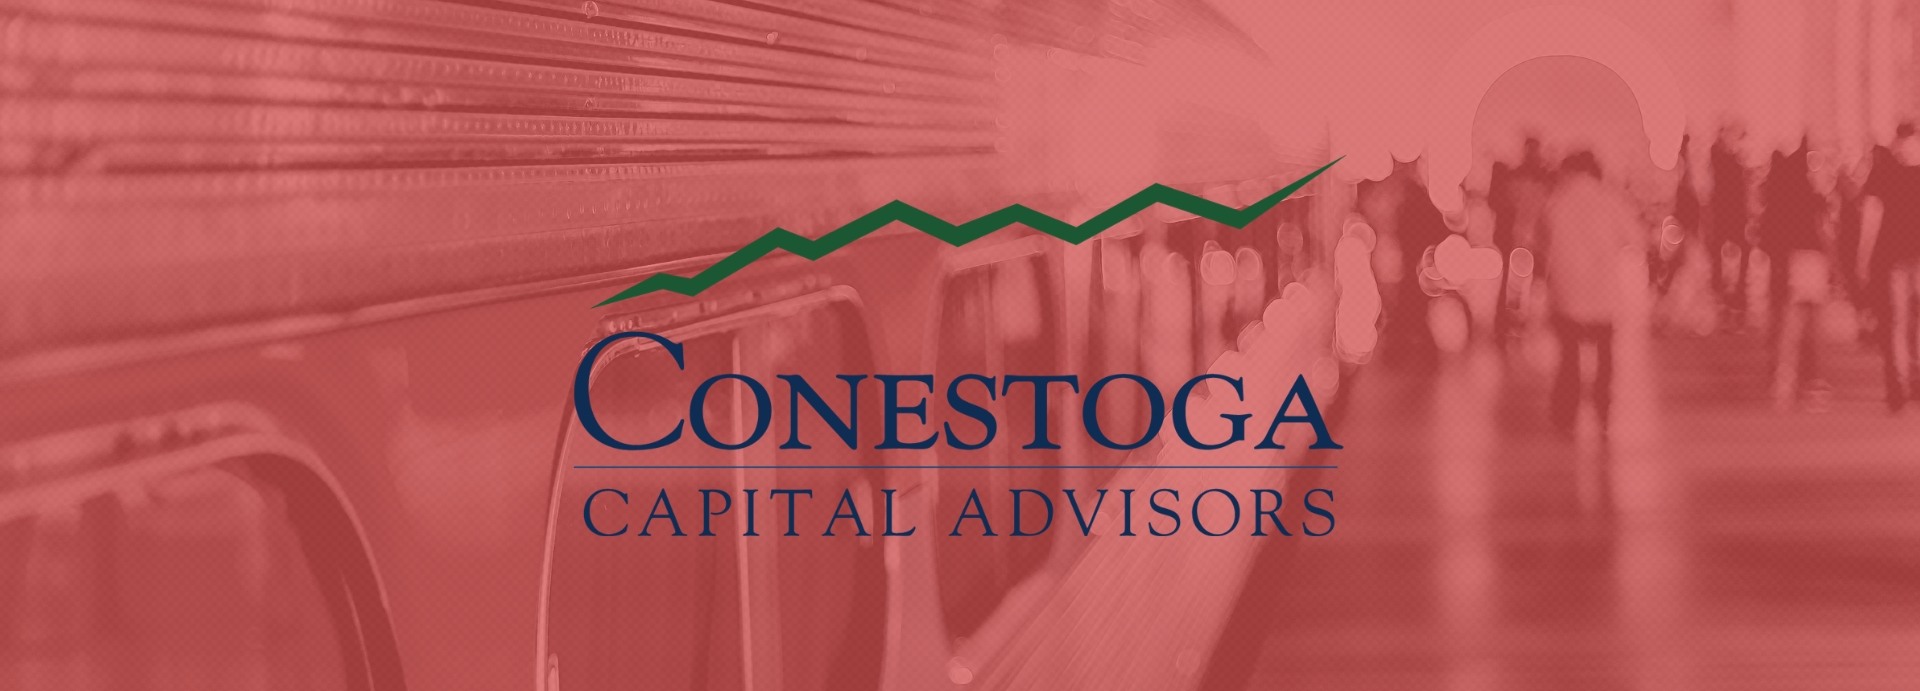 Conestoga Capital Advisors Promotes Partner | FIN News